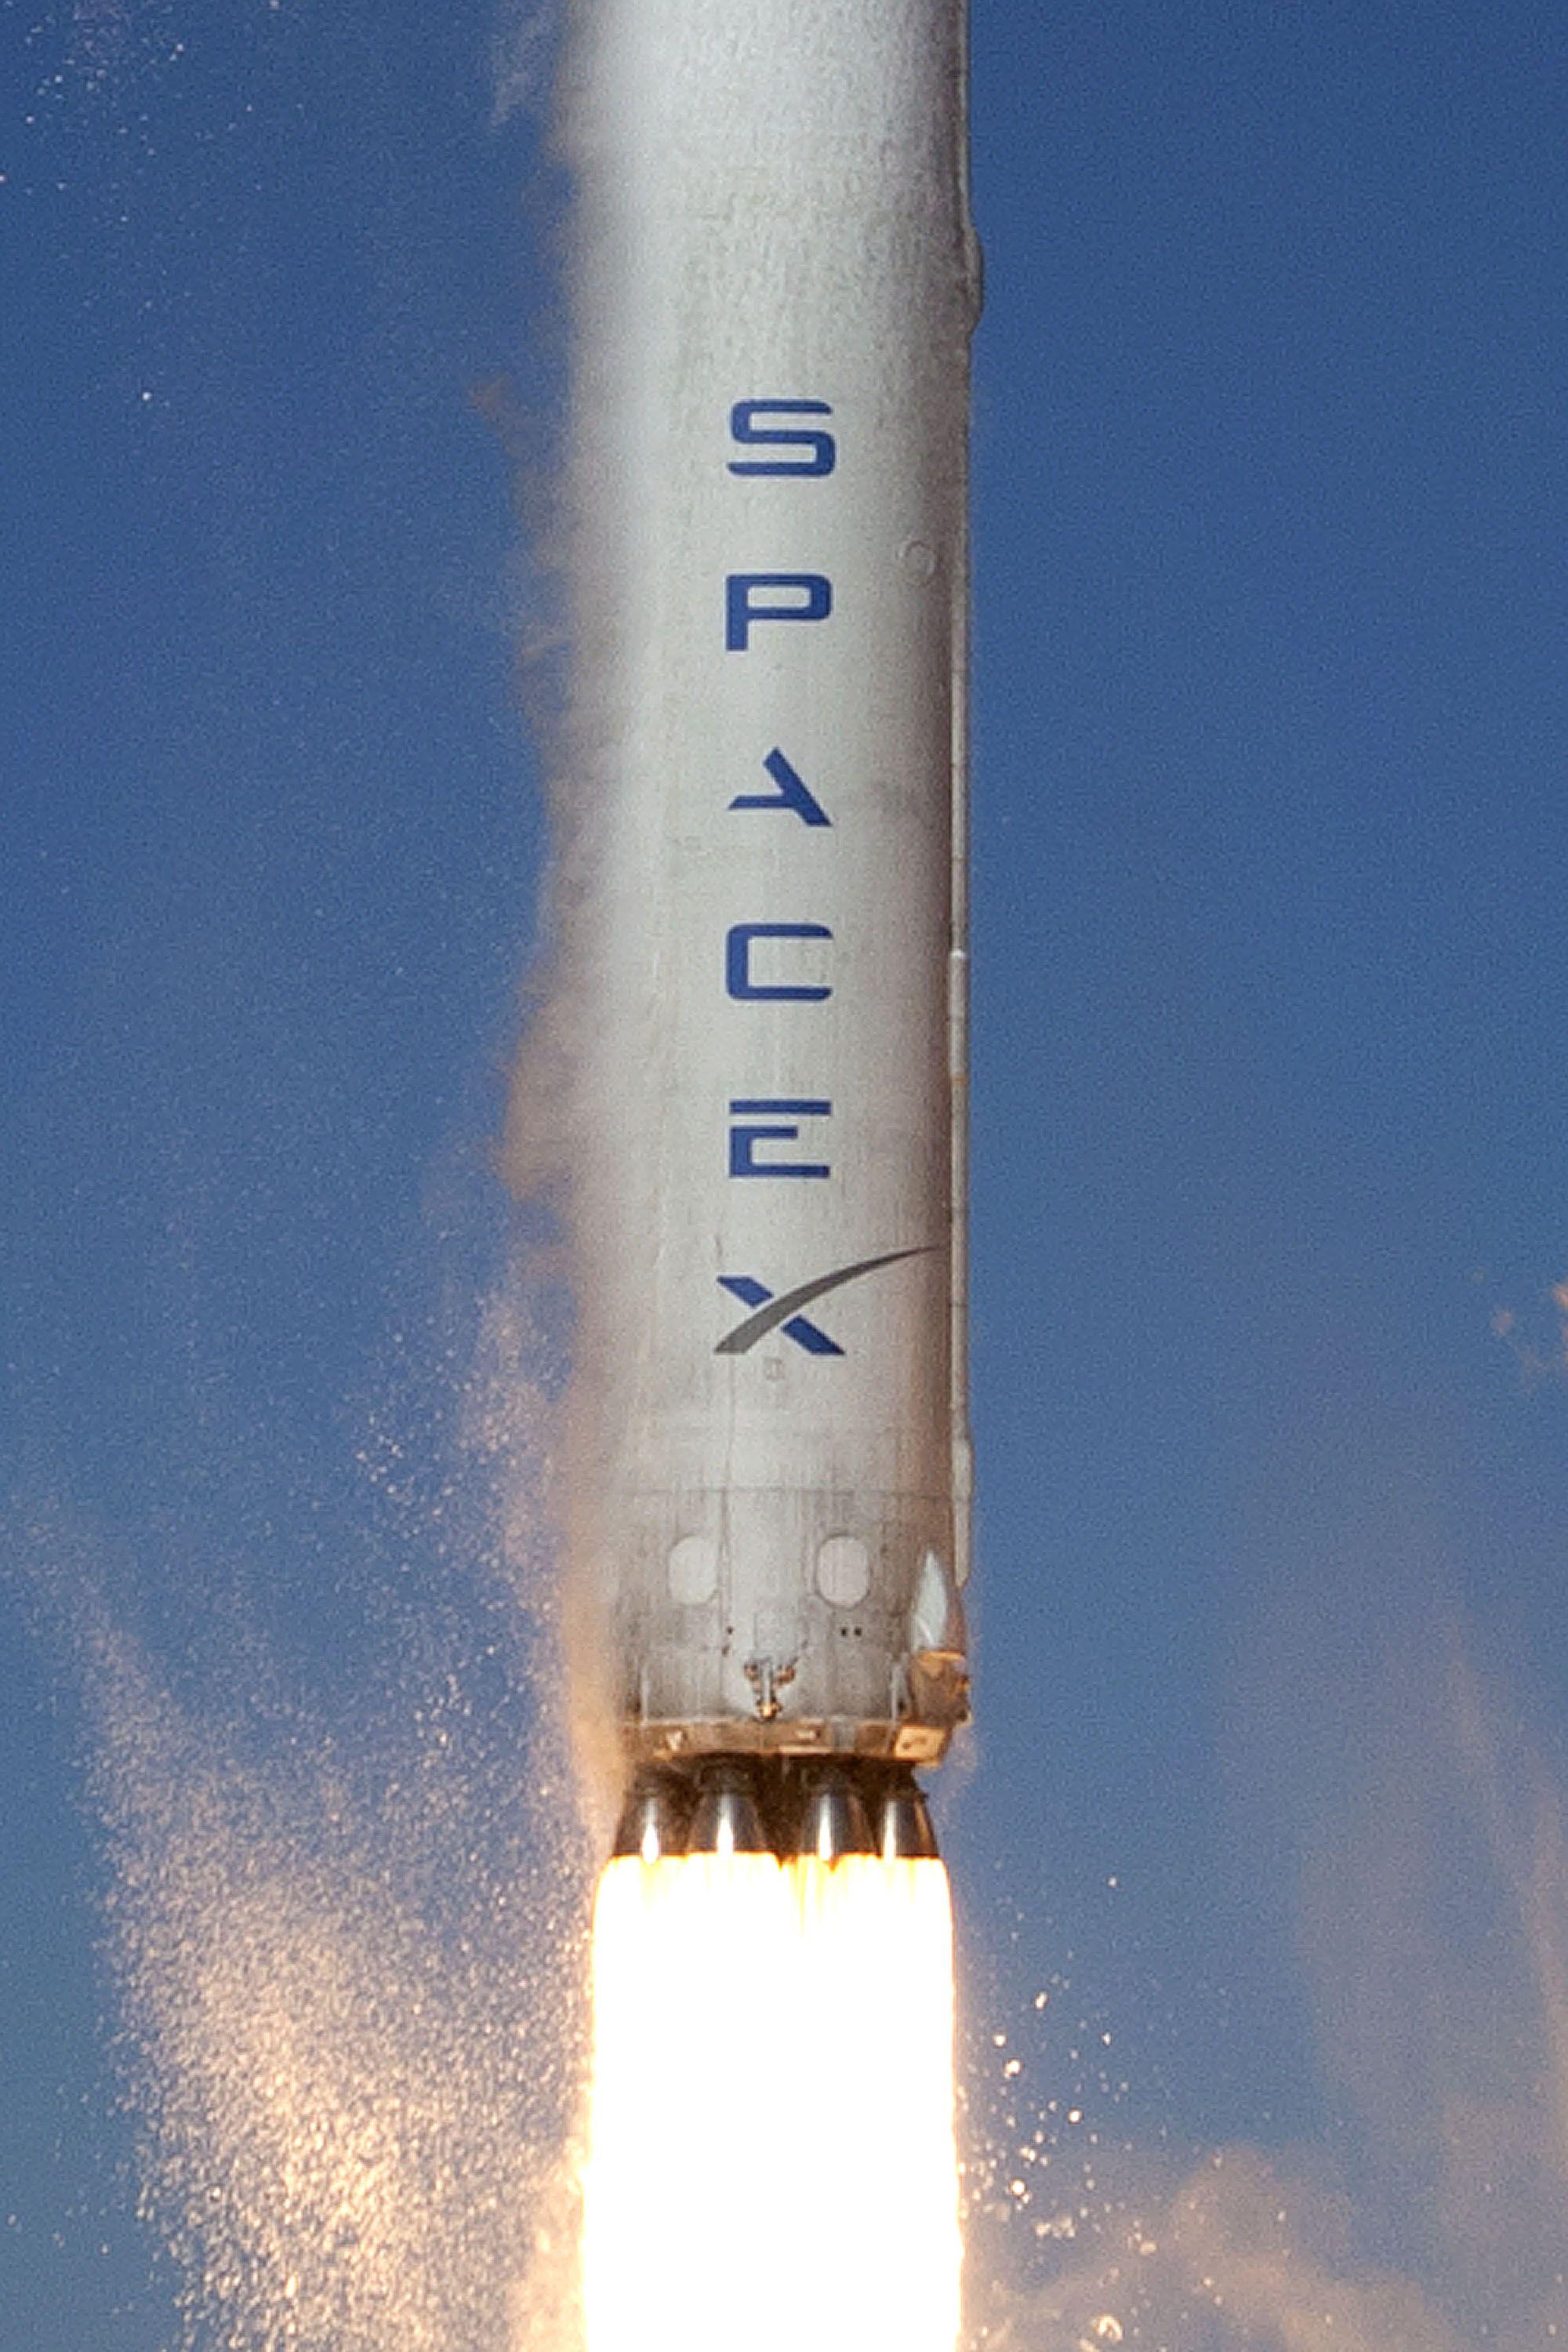 Download Elon Musk Space X Wallpaper Images